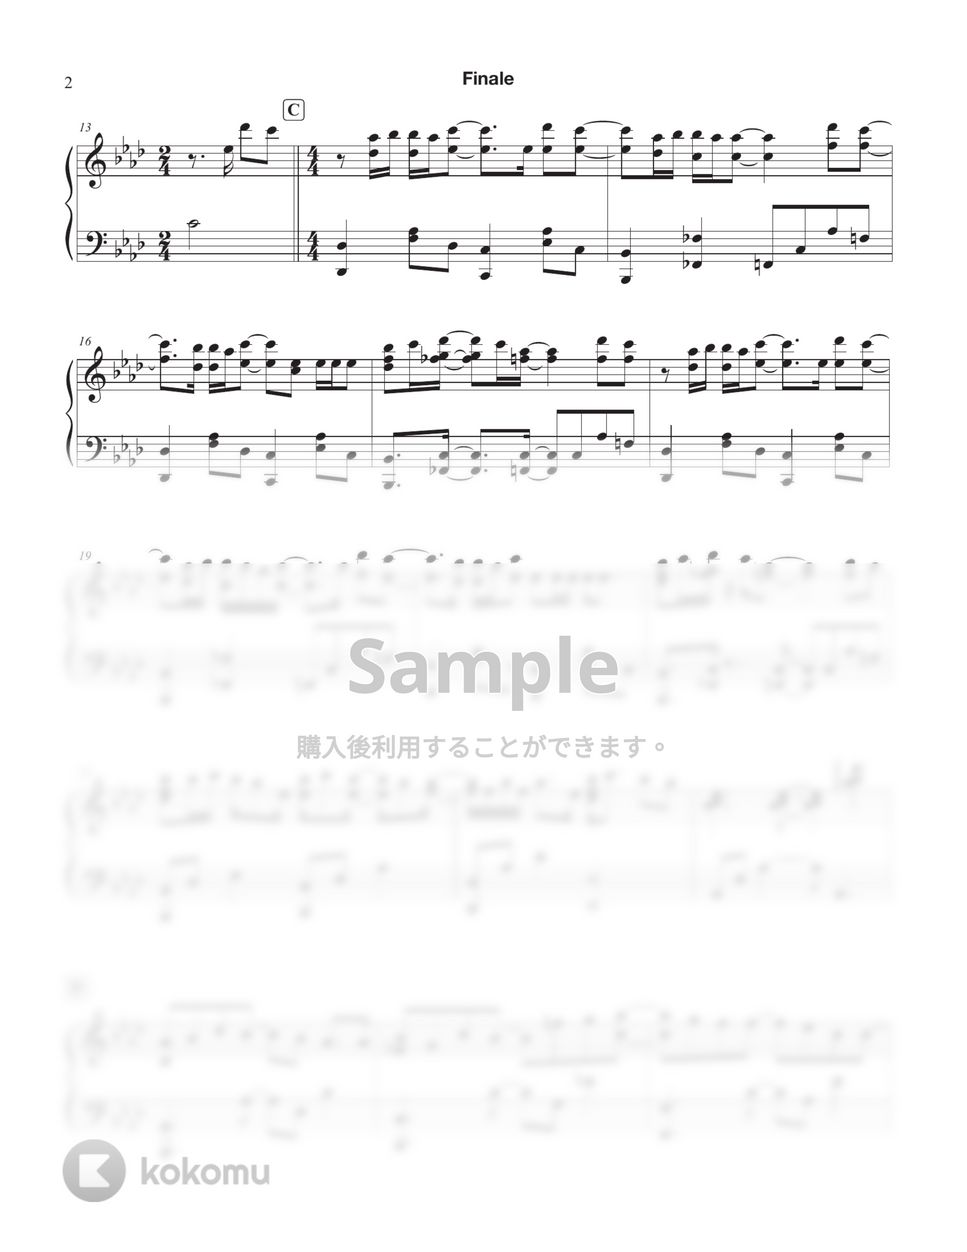 eill - 片っぽ (Full+易しくて短い ver。) by Tully Piano